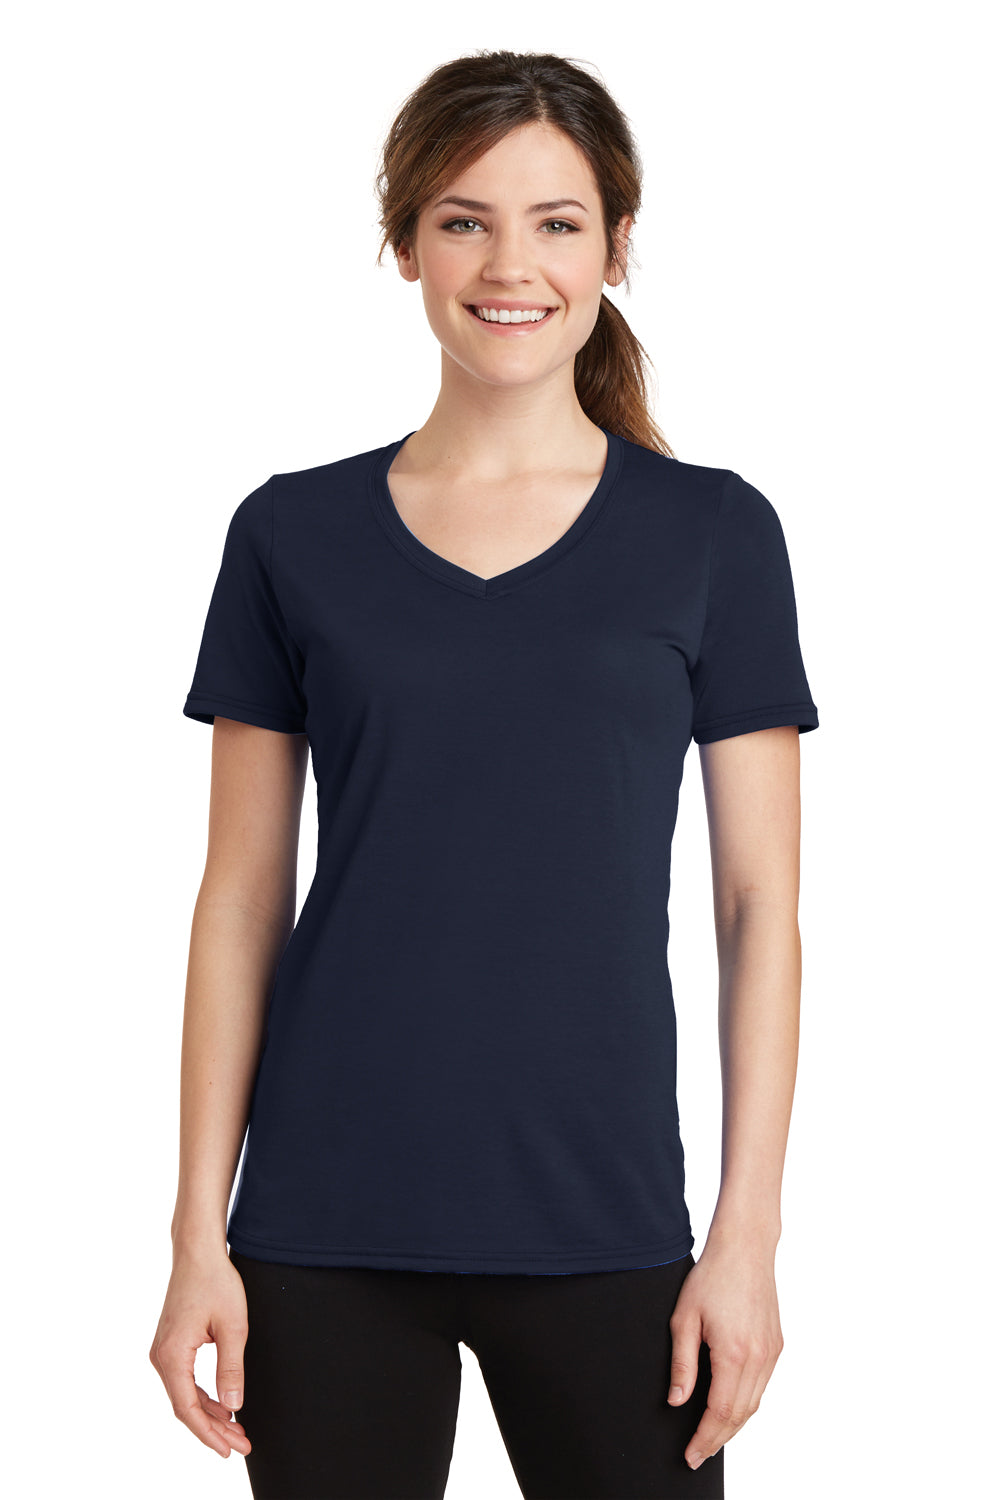 Port & Company LPC381V Womens Dry Zone Performance Moisture Wicking Short Sleeve V-Neck T-Shirt Navy Blue Front